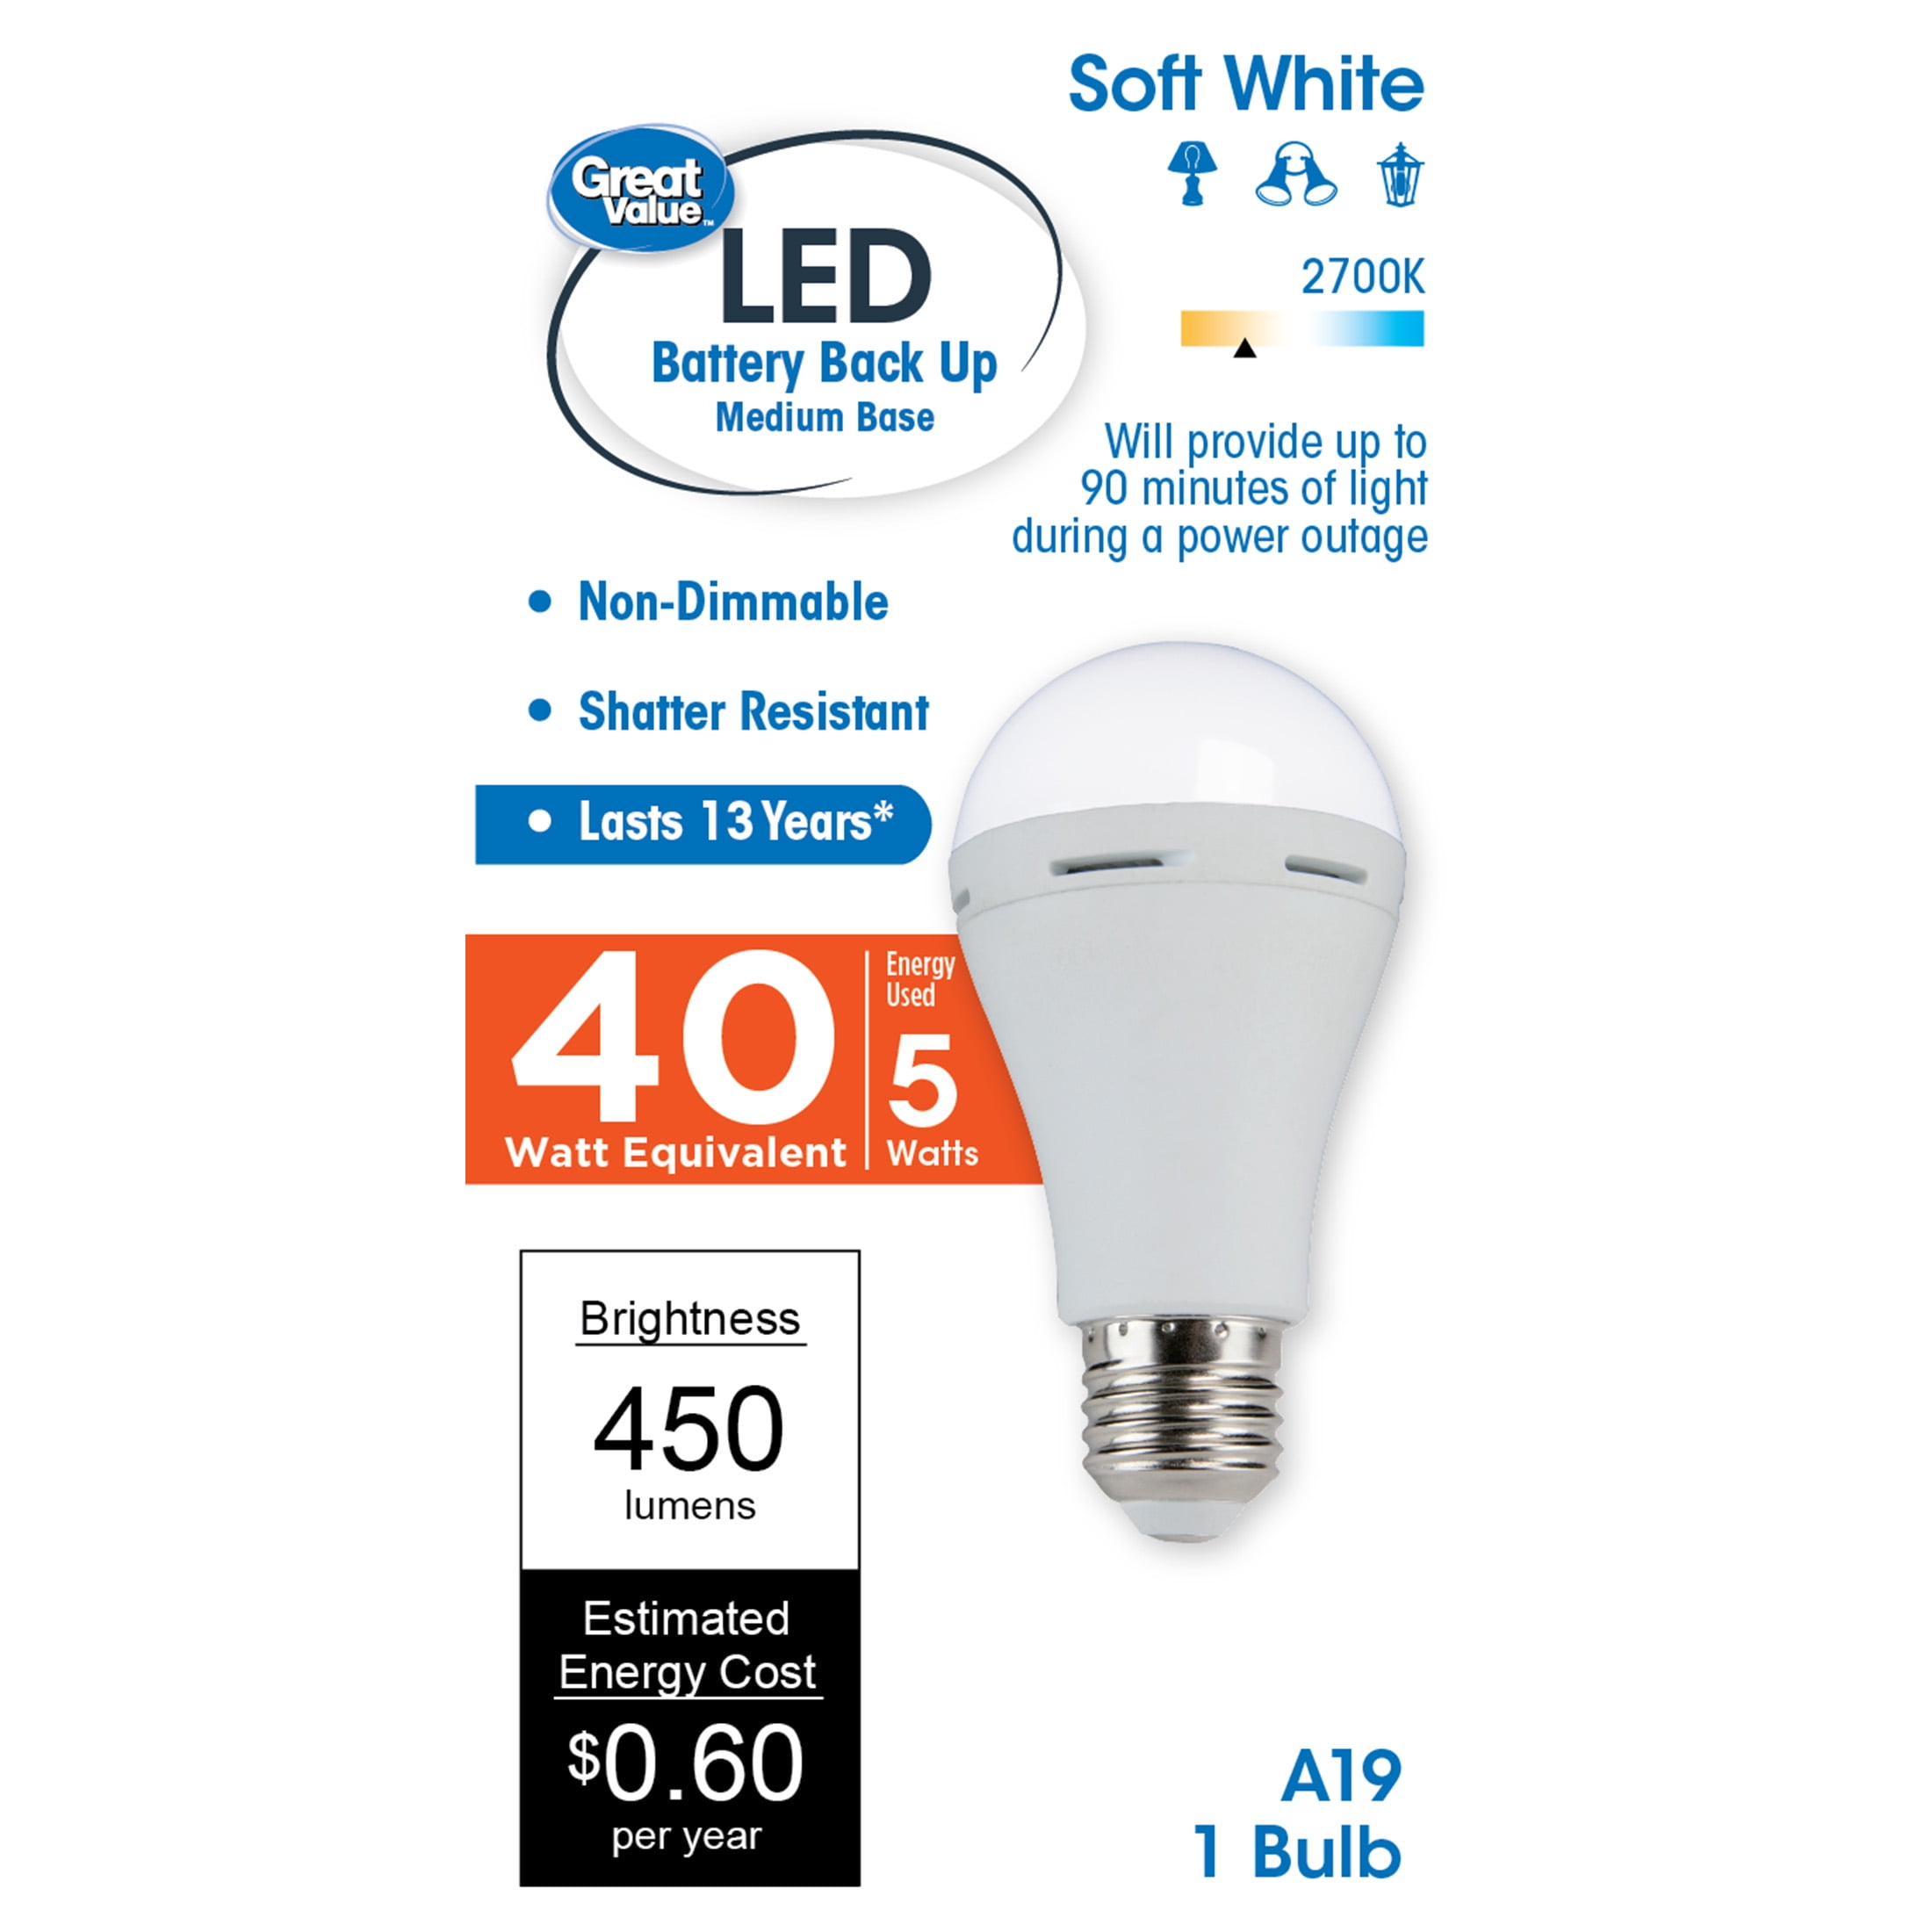 Great Value LED Bulb, 5 Watts (40W Eqv.) Battery Backup Lamp E26 Medium Base, Non-dimmable, White, - Walmart.com